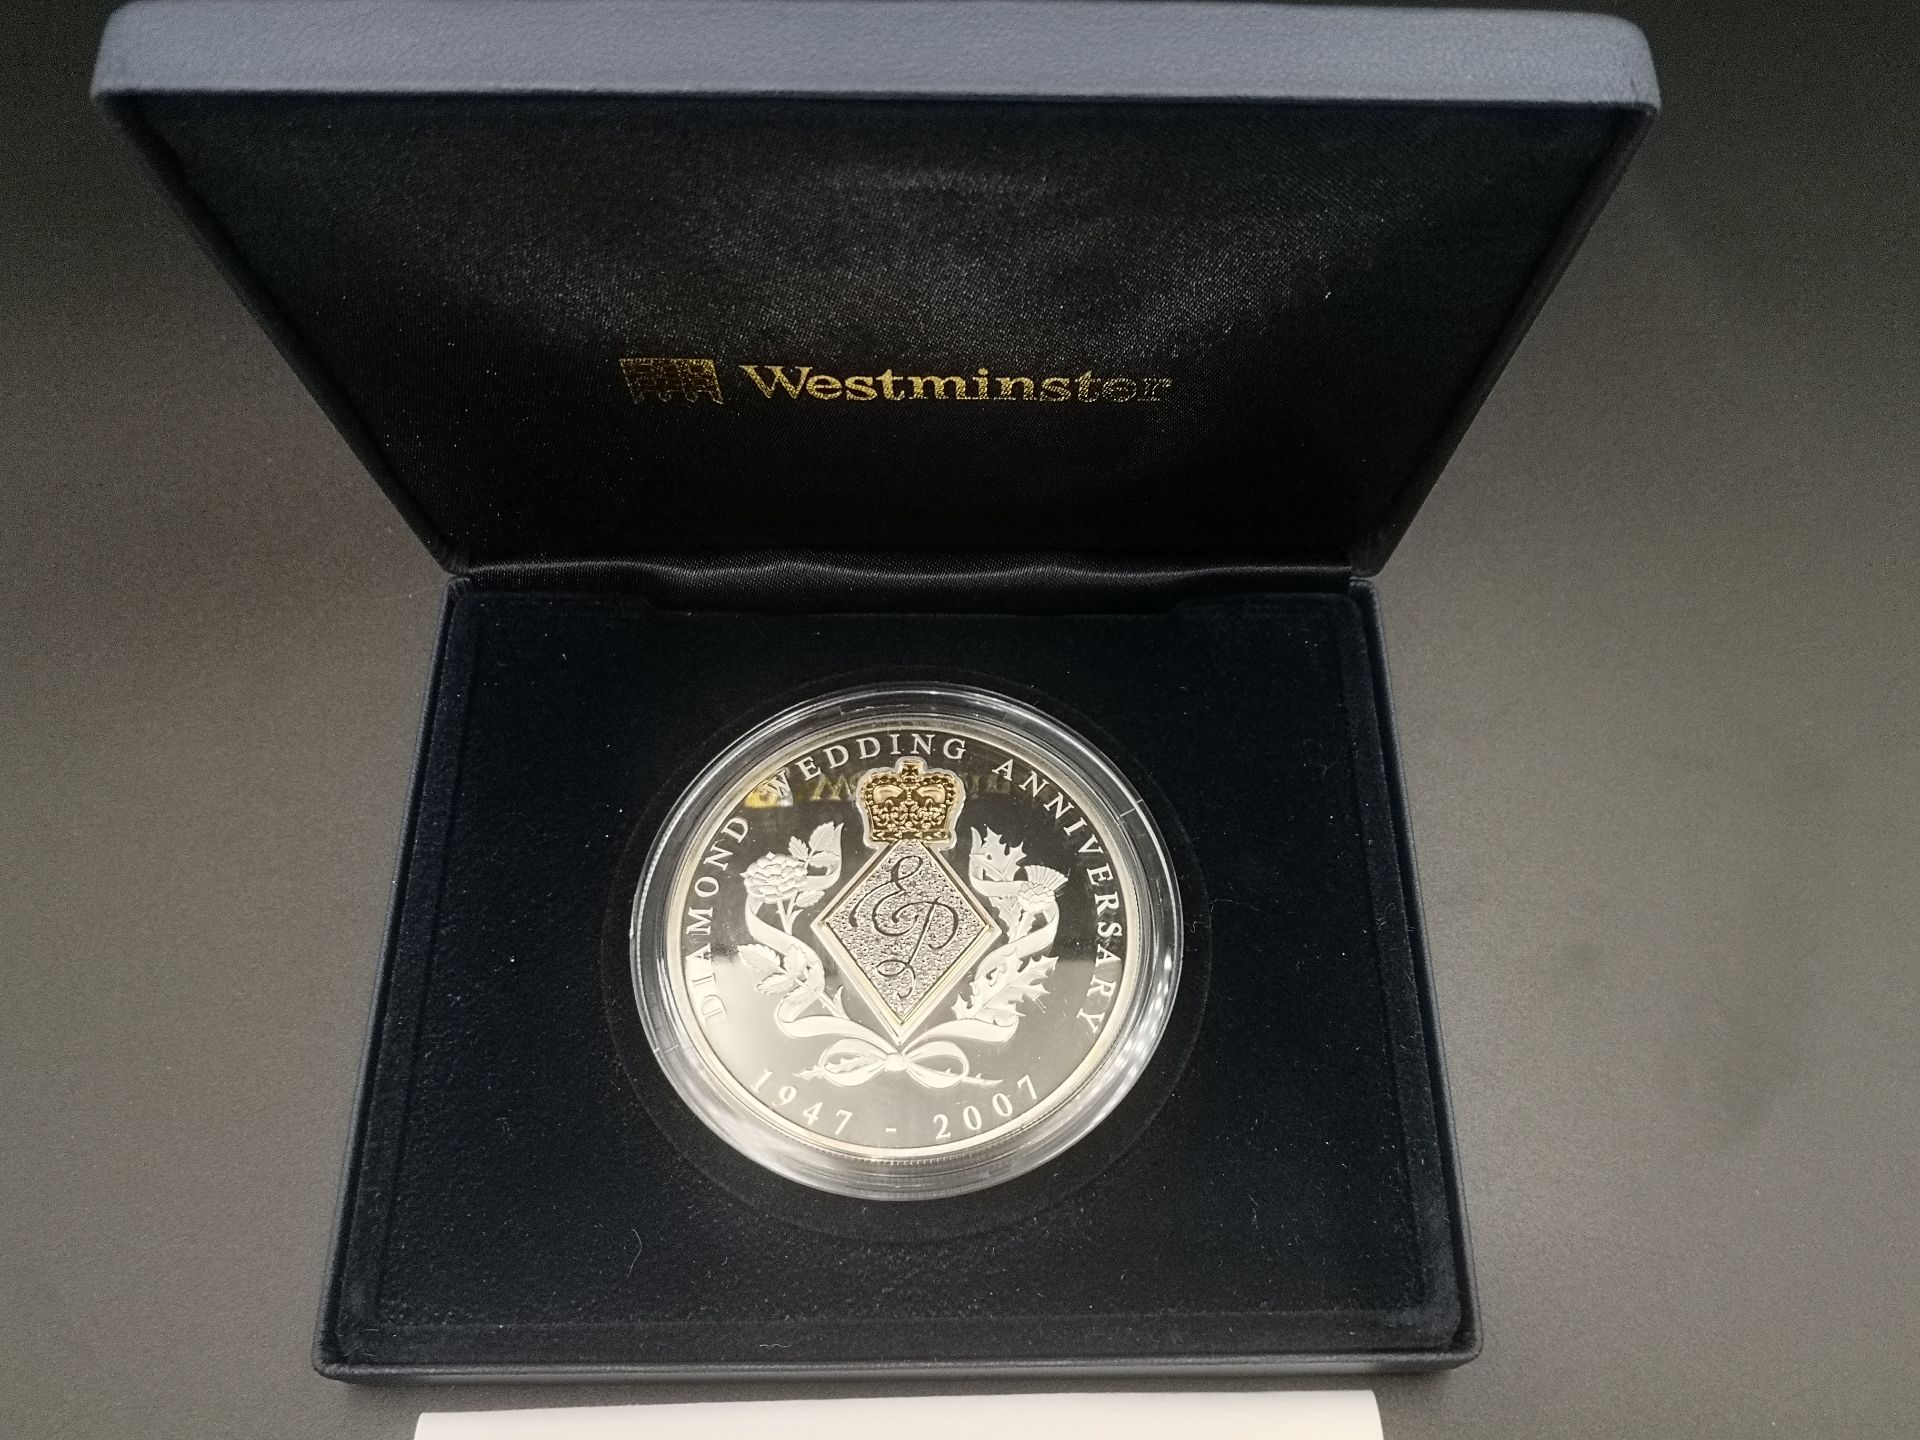 Westminster Diamond Wedding silver commemorative coin - Bild 2 aus 4